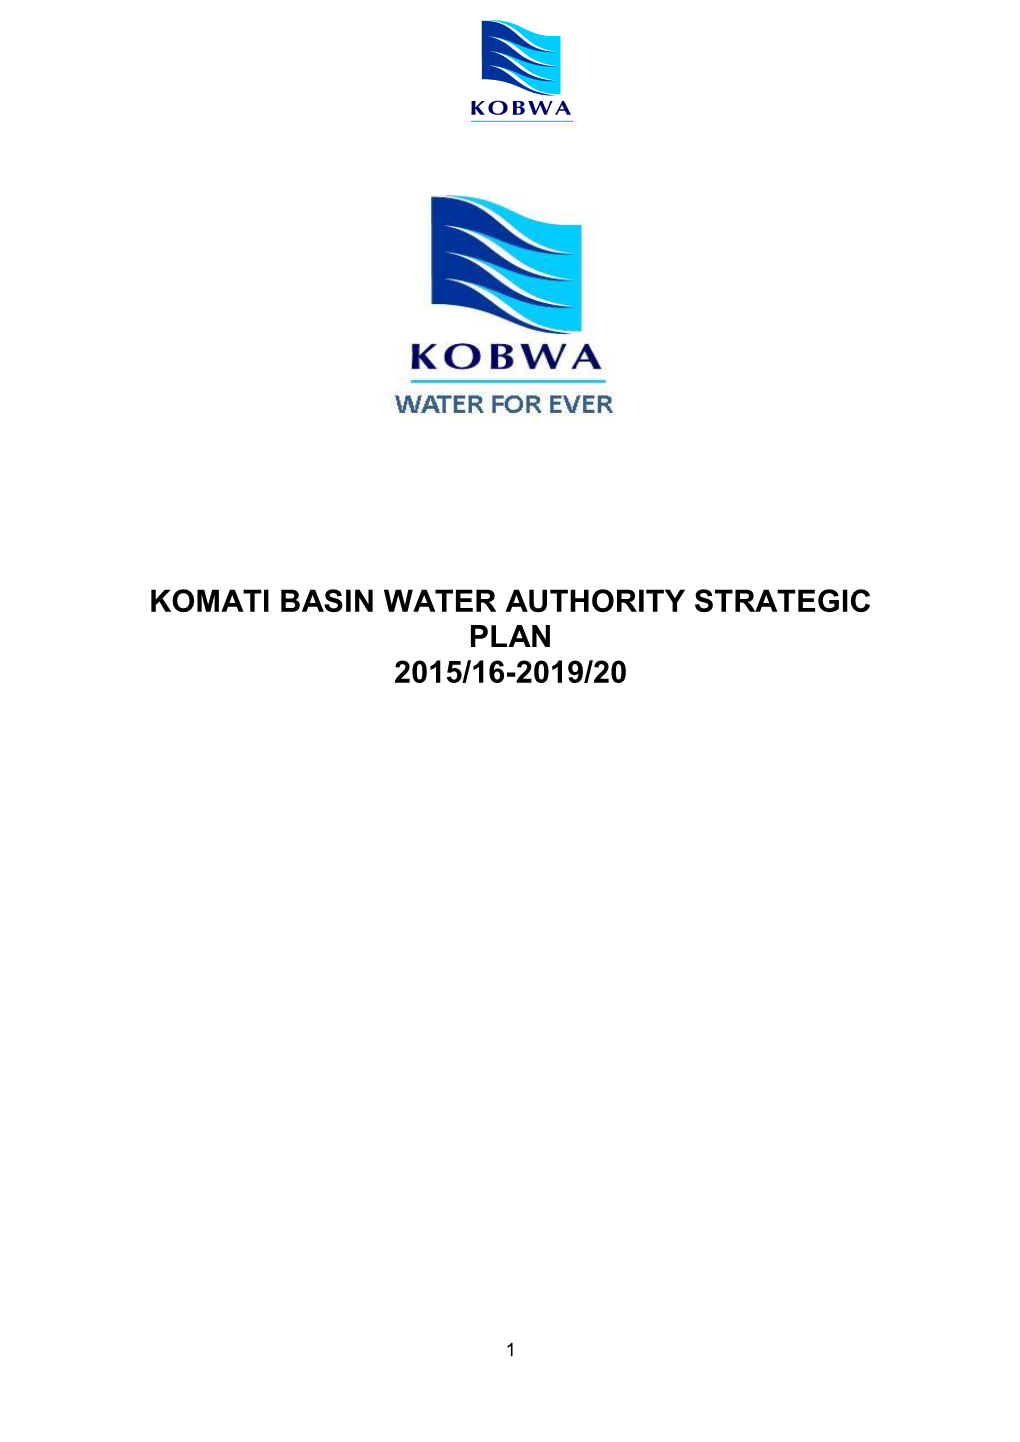 Komati Basin Water Authority Strategic Plan 2015/16-2019/20